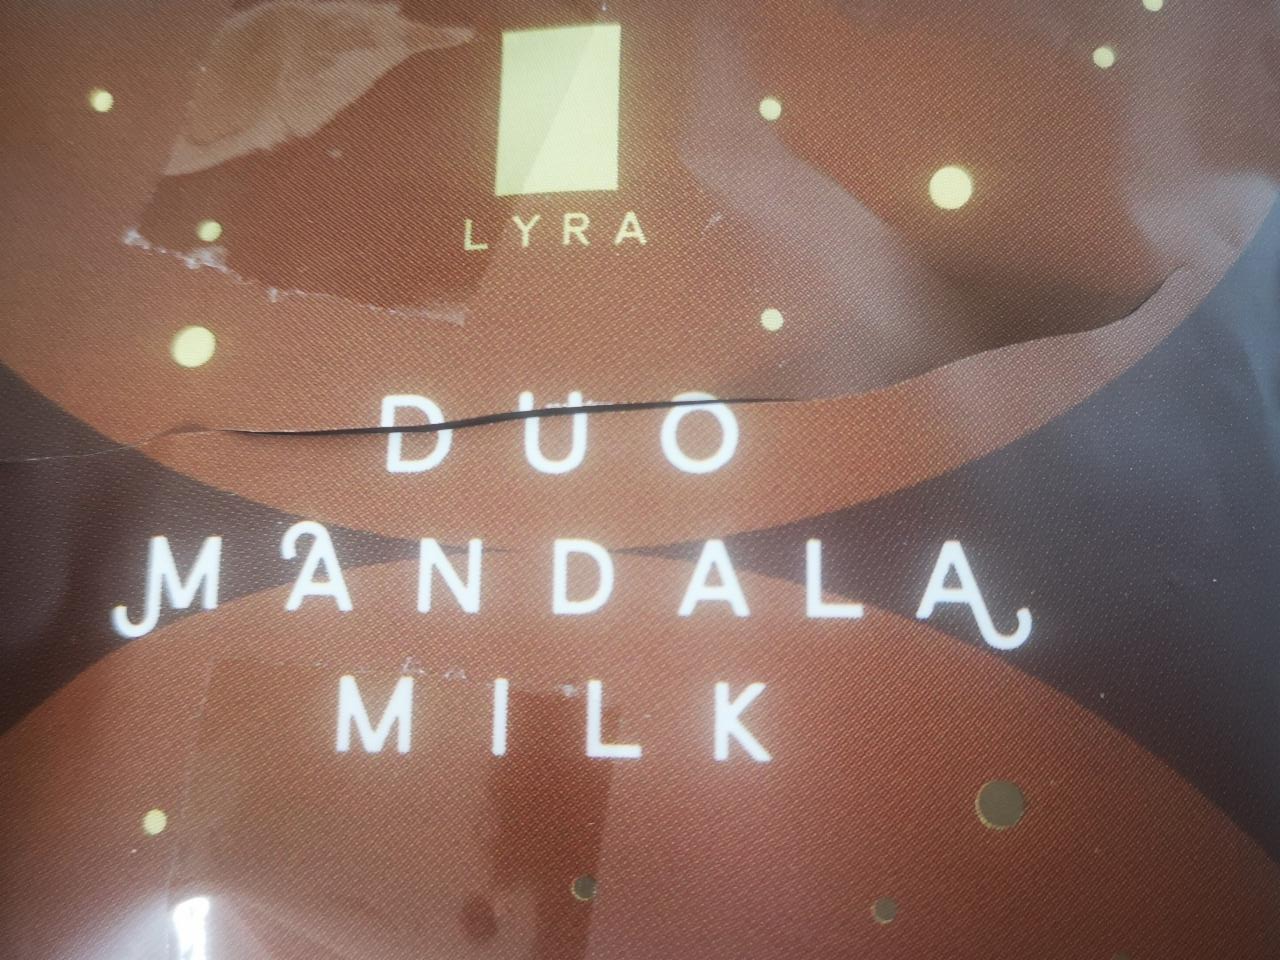 Fotografie - Duo mandala lyra milk